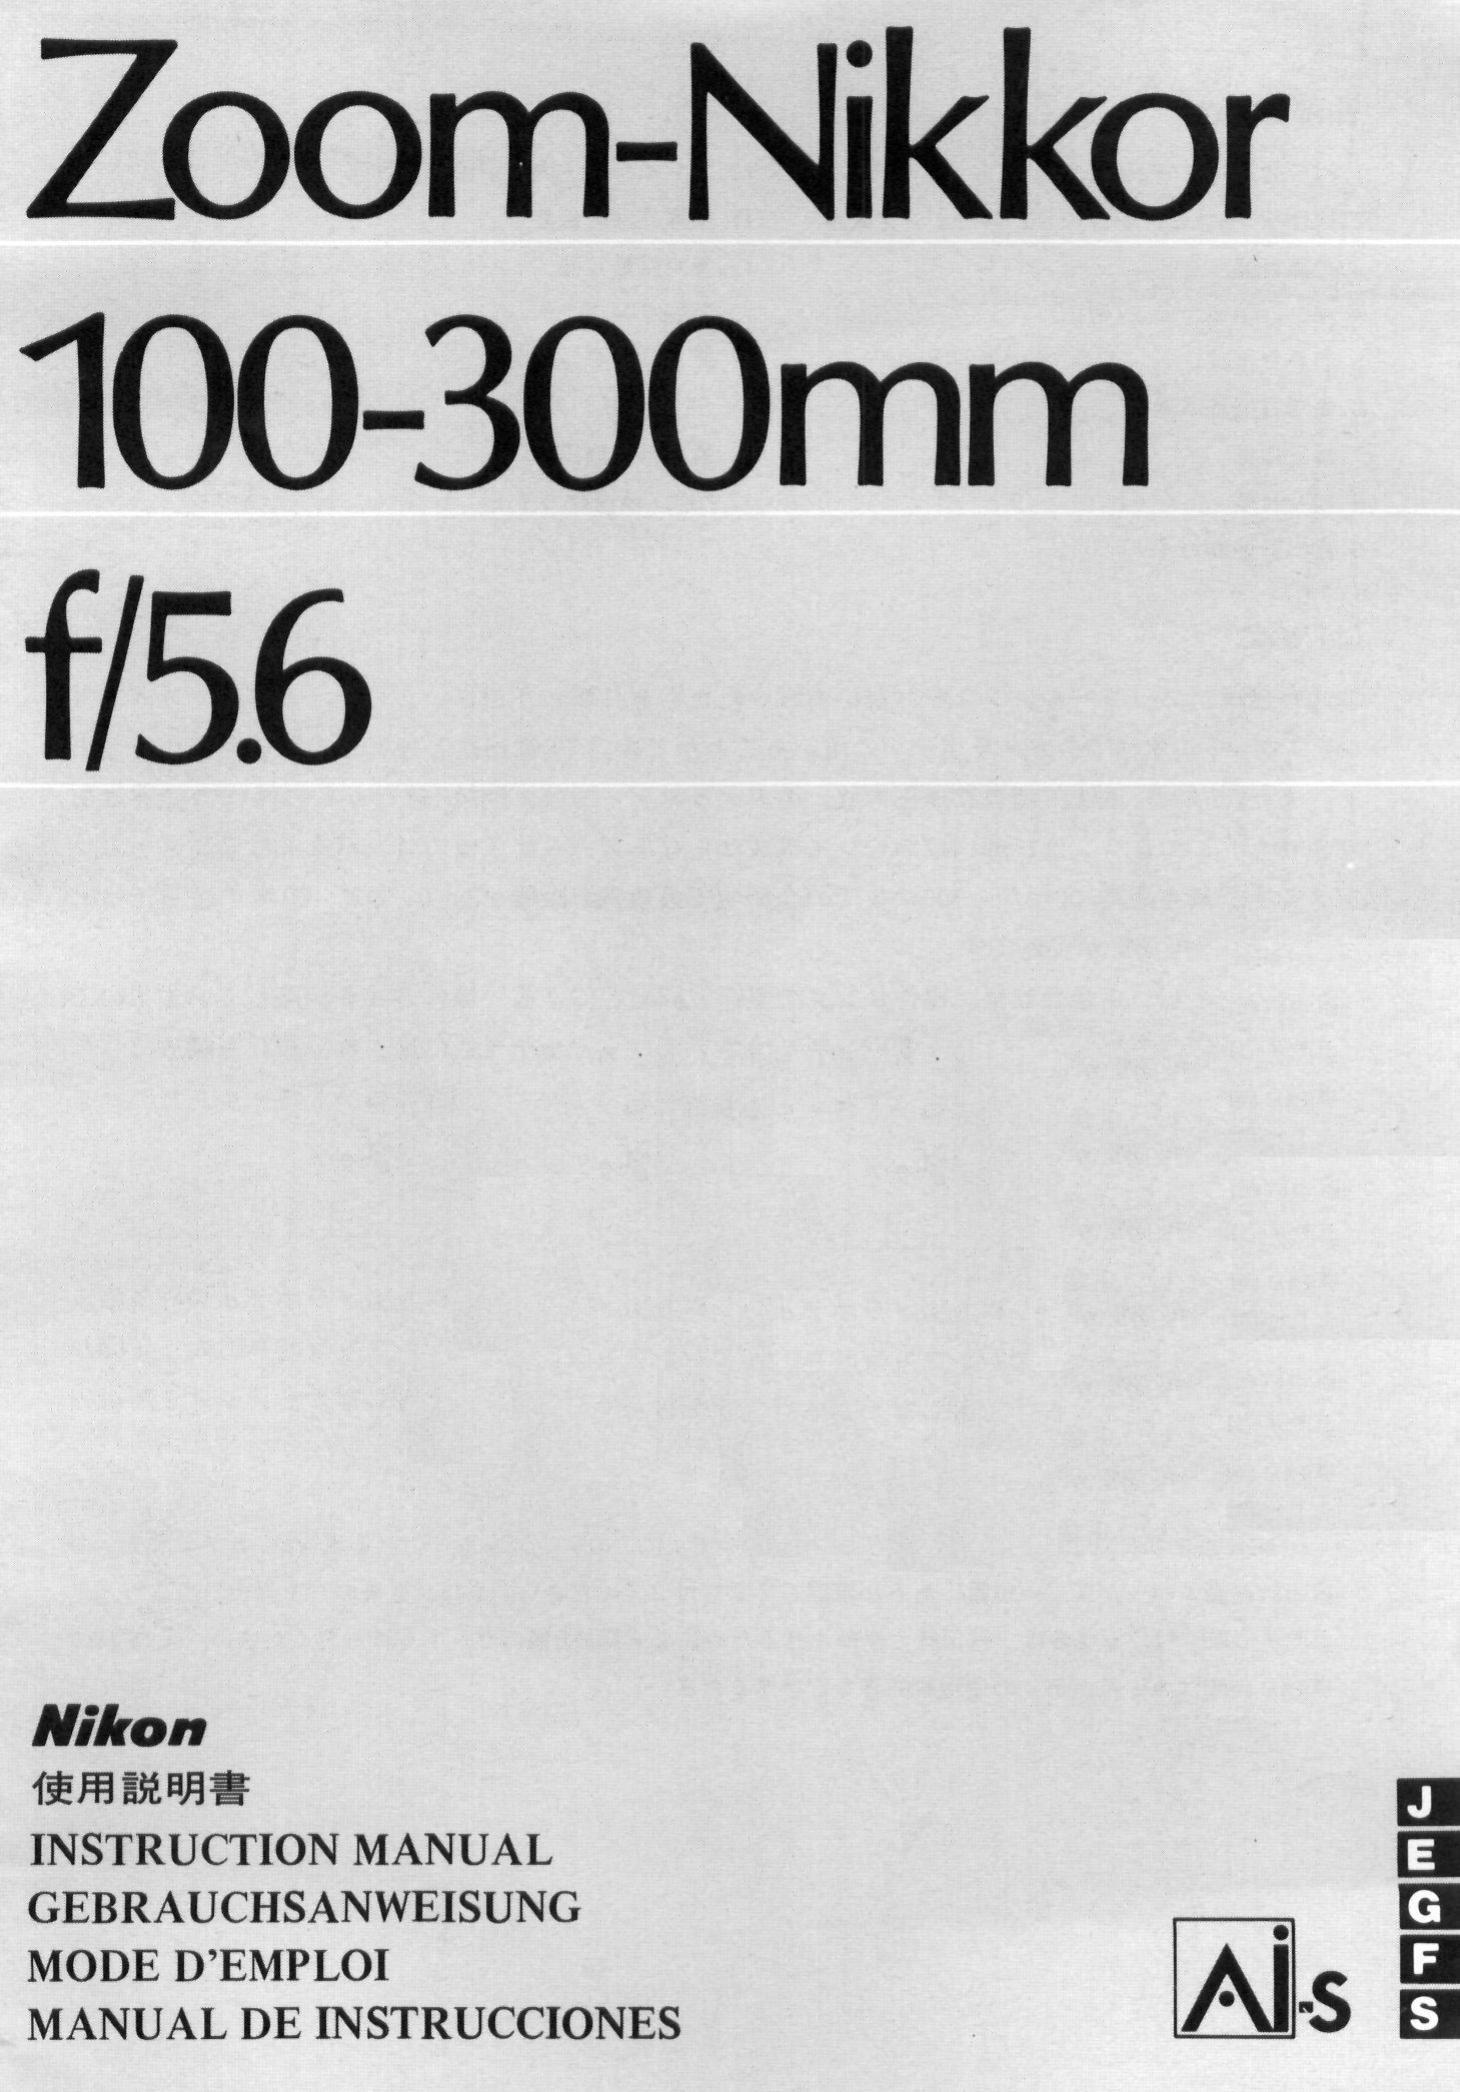 Nikon Zoom-Nikkor 100-300mm f/5.6 Camera Accessories User Manual